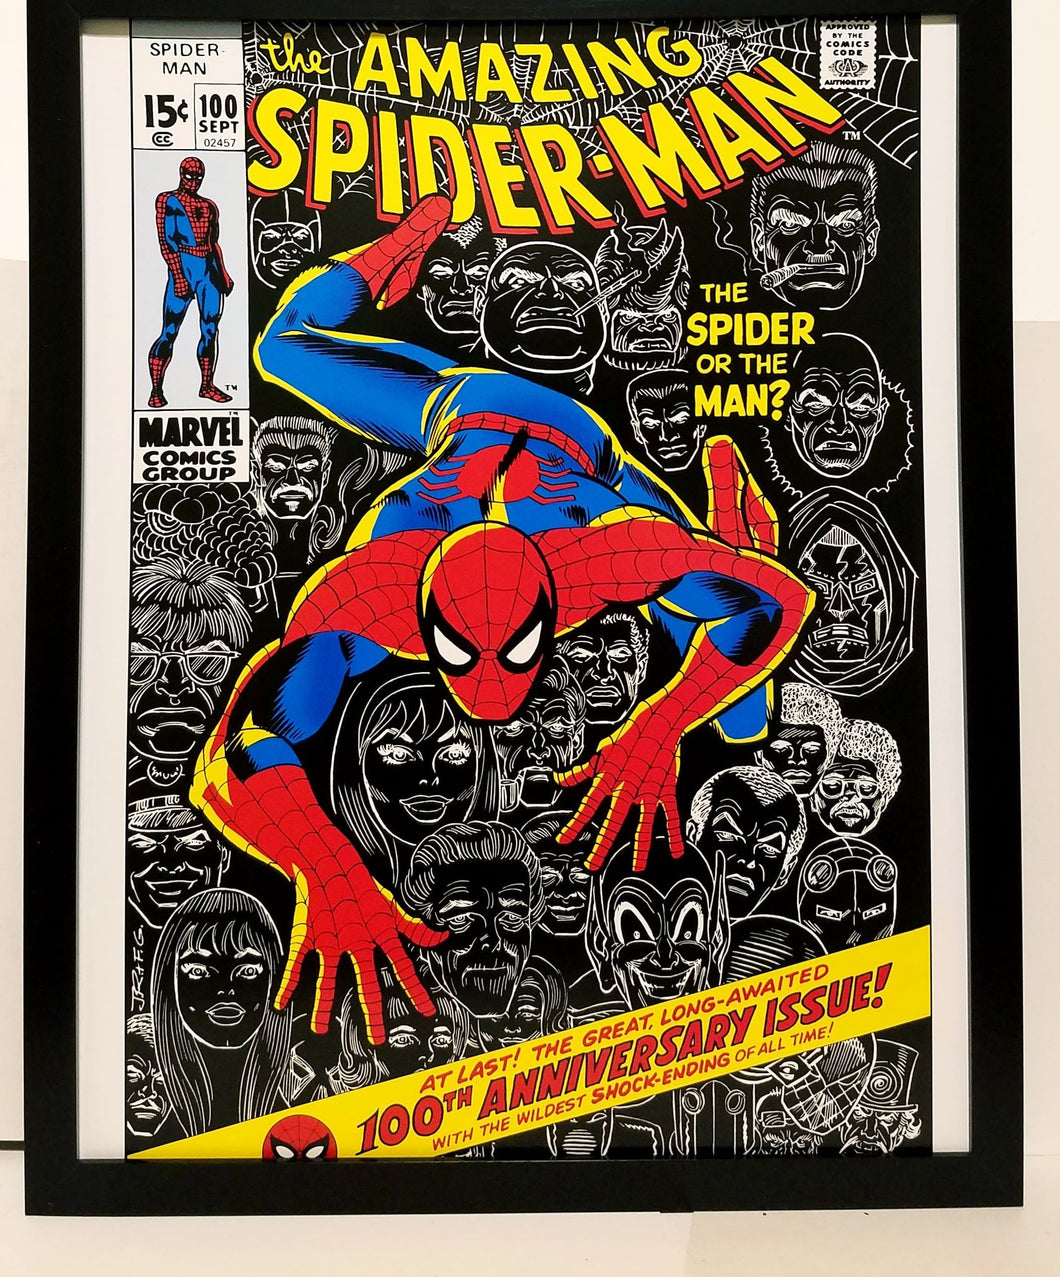 Amazing Spider-Man #100 by John Romita 11x14 FRAMED Marvel Comics Art Print Poster